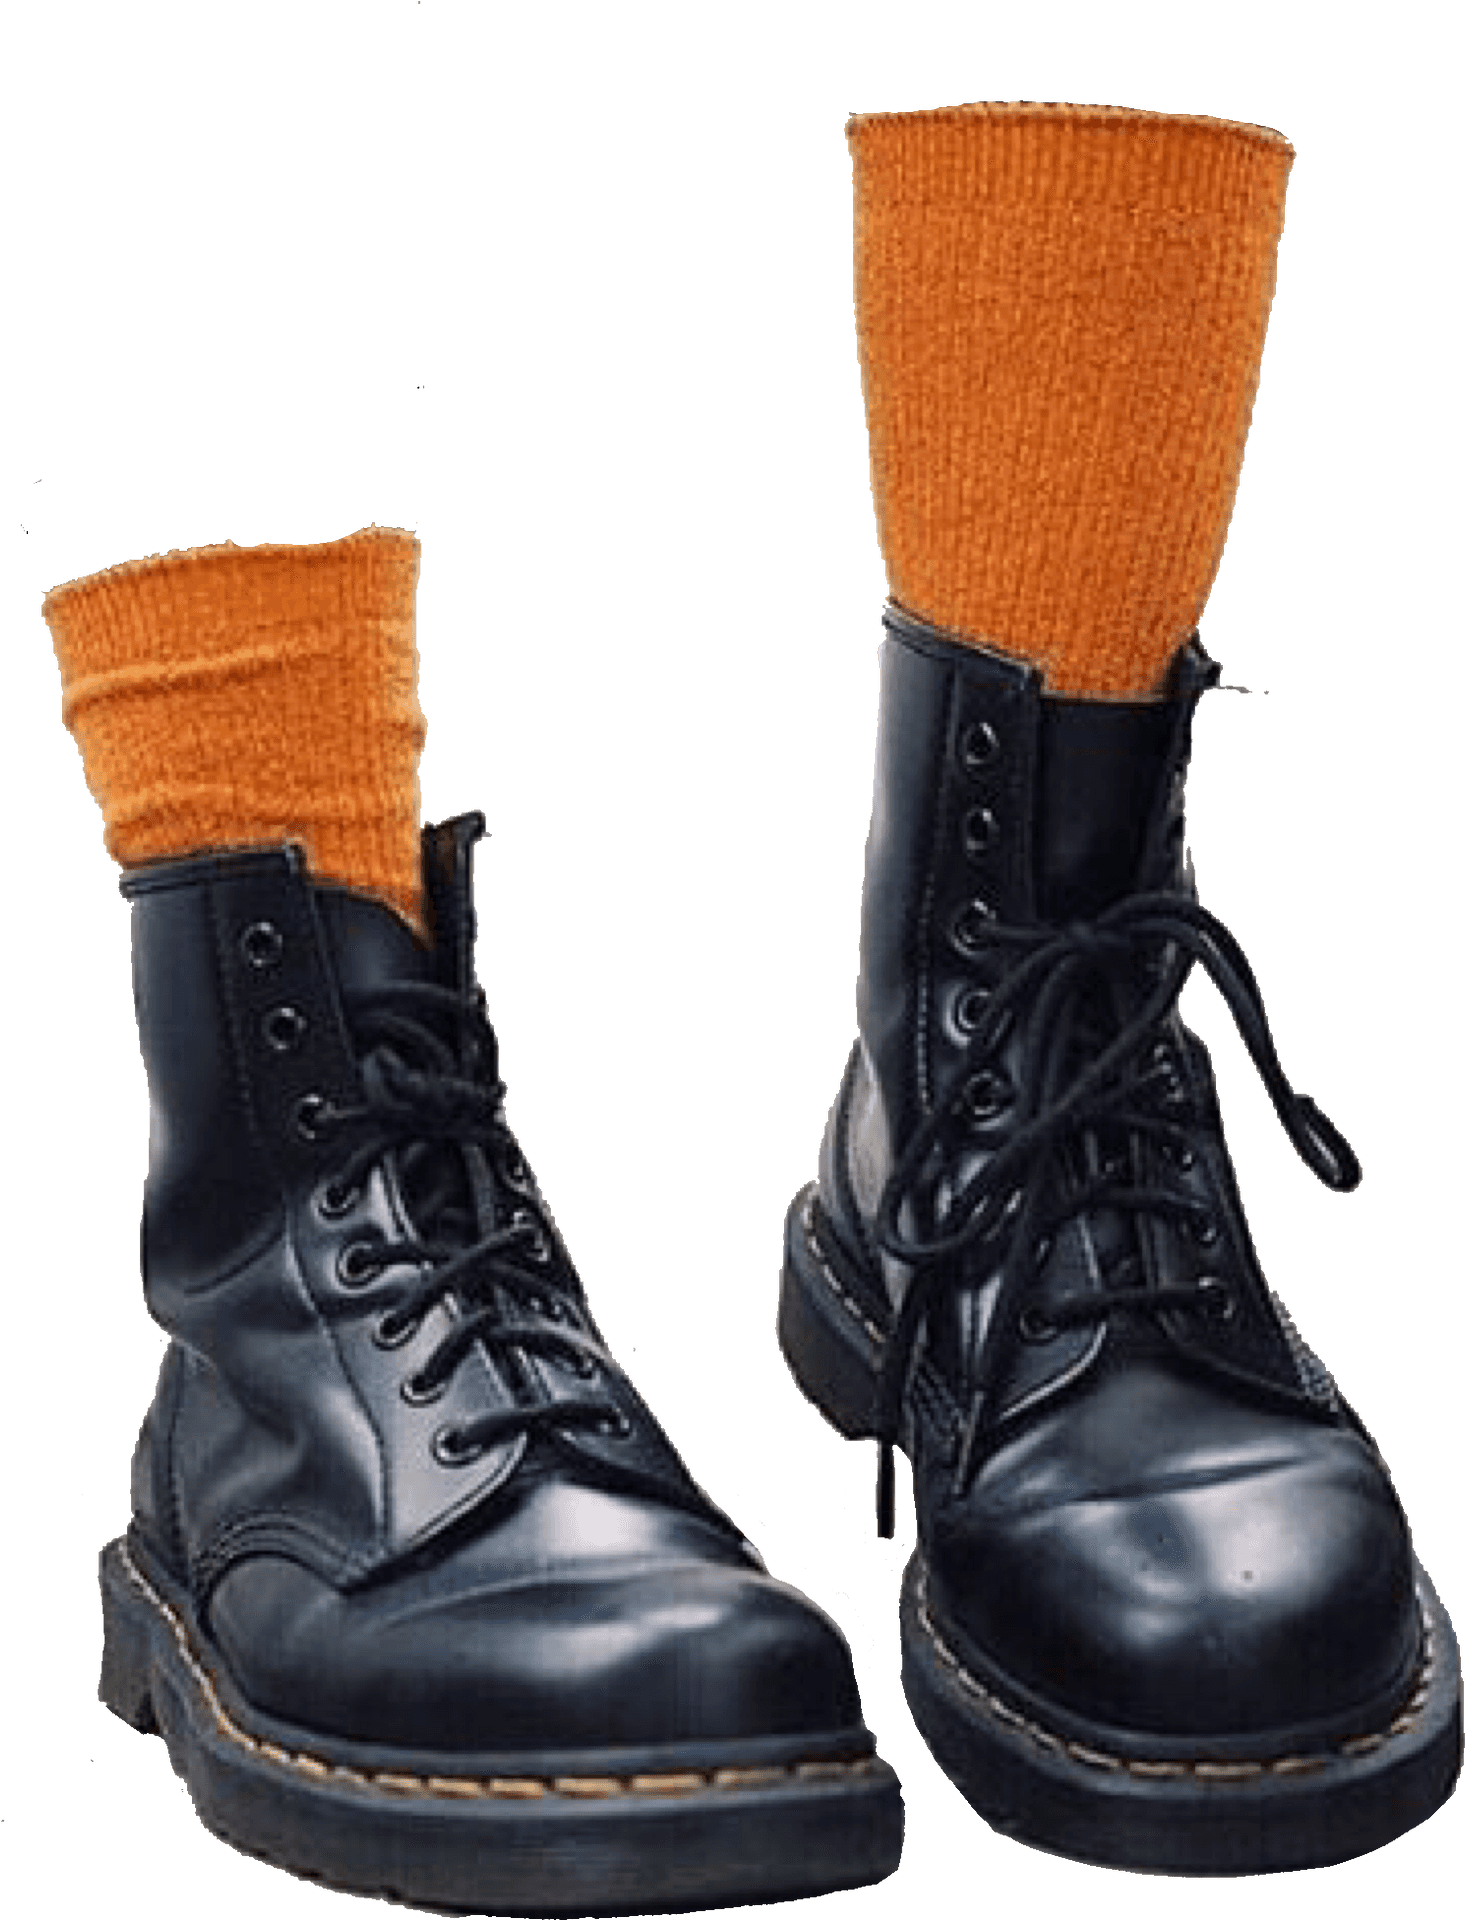 Black Boots With Orange Socks PNG